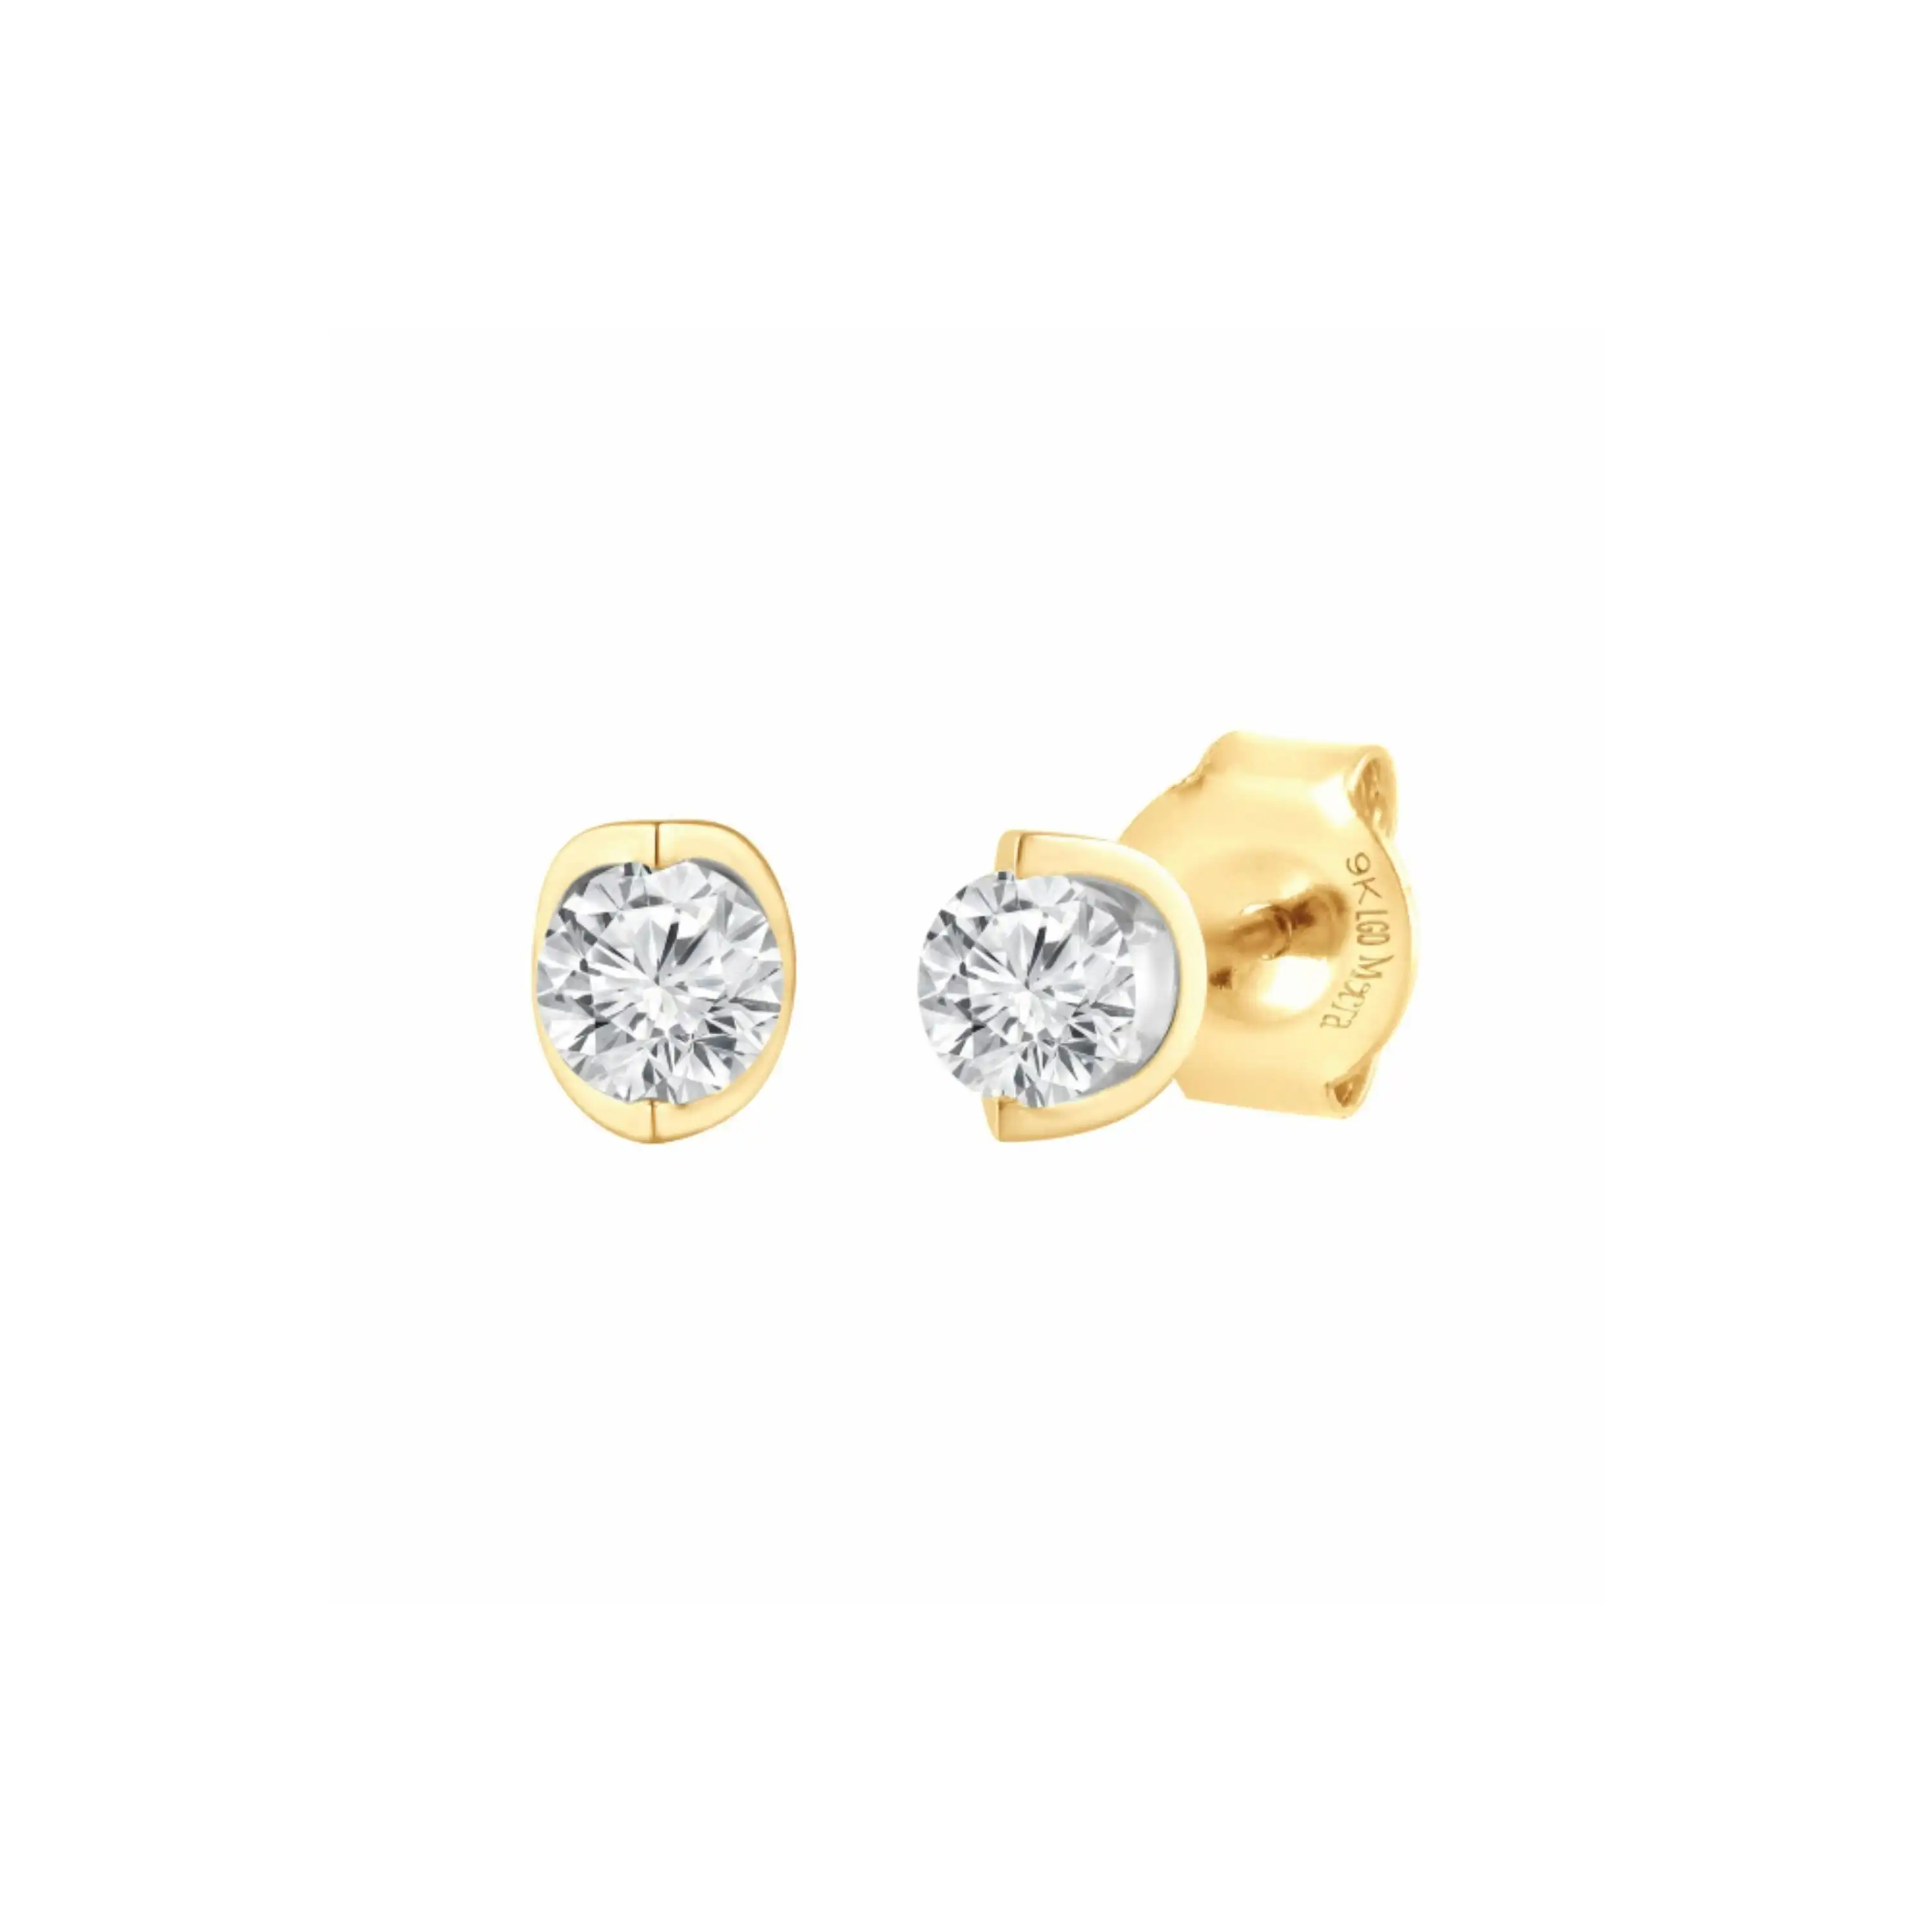 Meera Bezel Look 1/5ct Laboratory Grown Solitaire Diamond Earrings in 9ct Yellow Gold